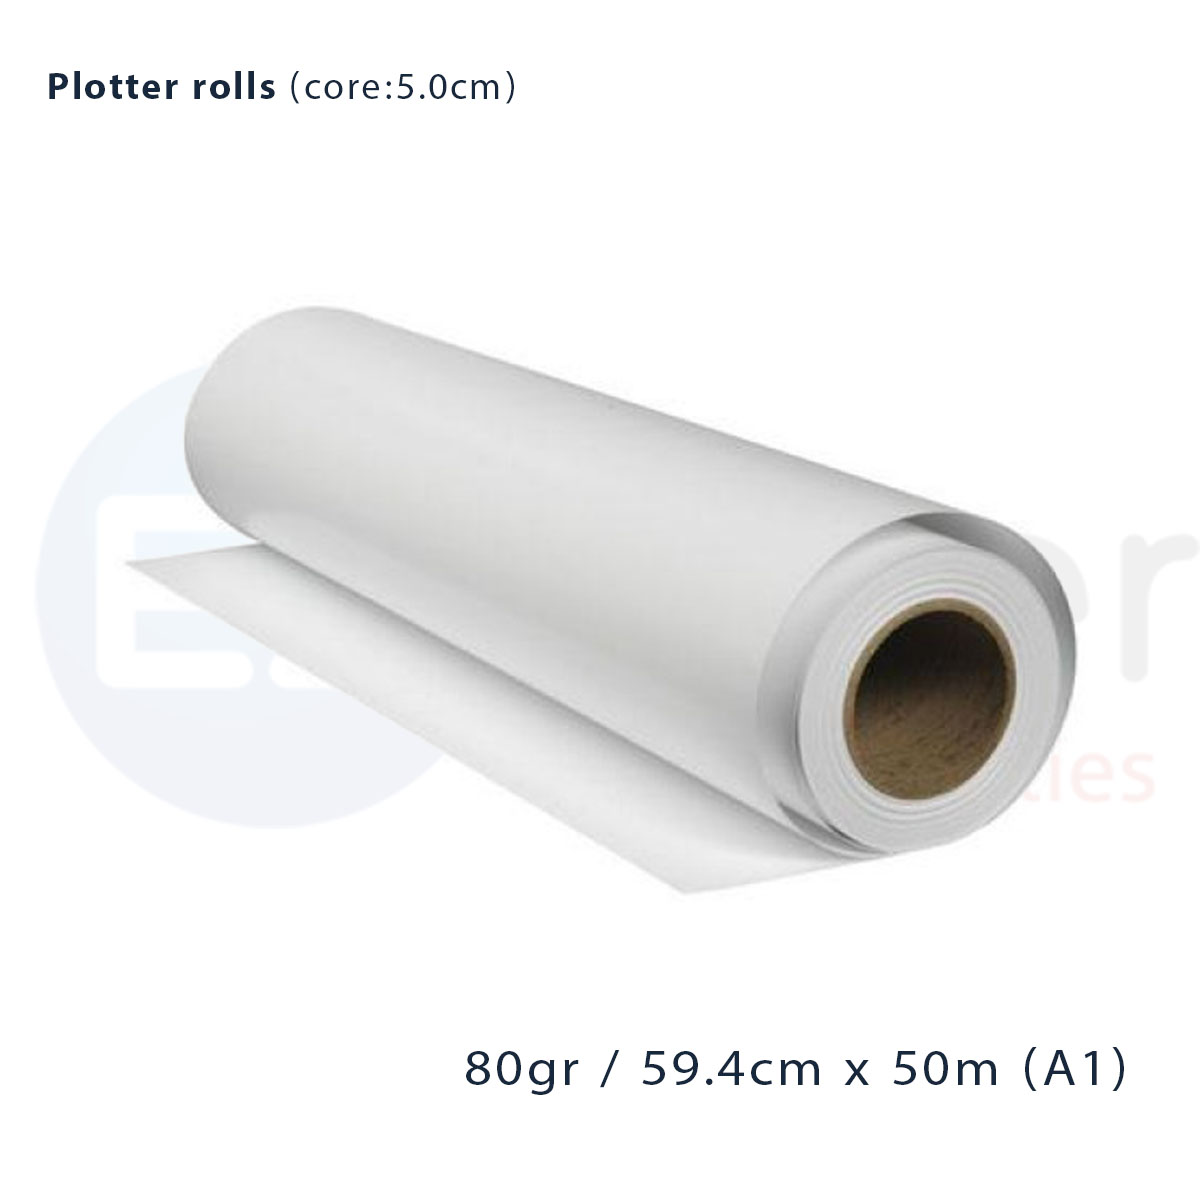 Plotter roll (59.4x50m) 80gr, A1, Core-5cm